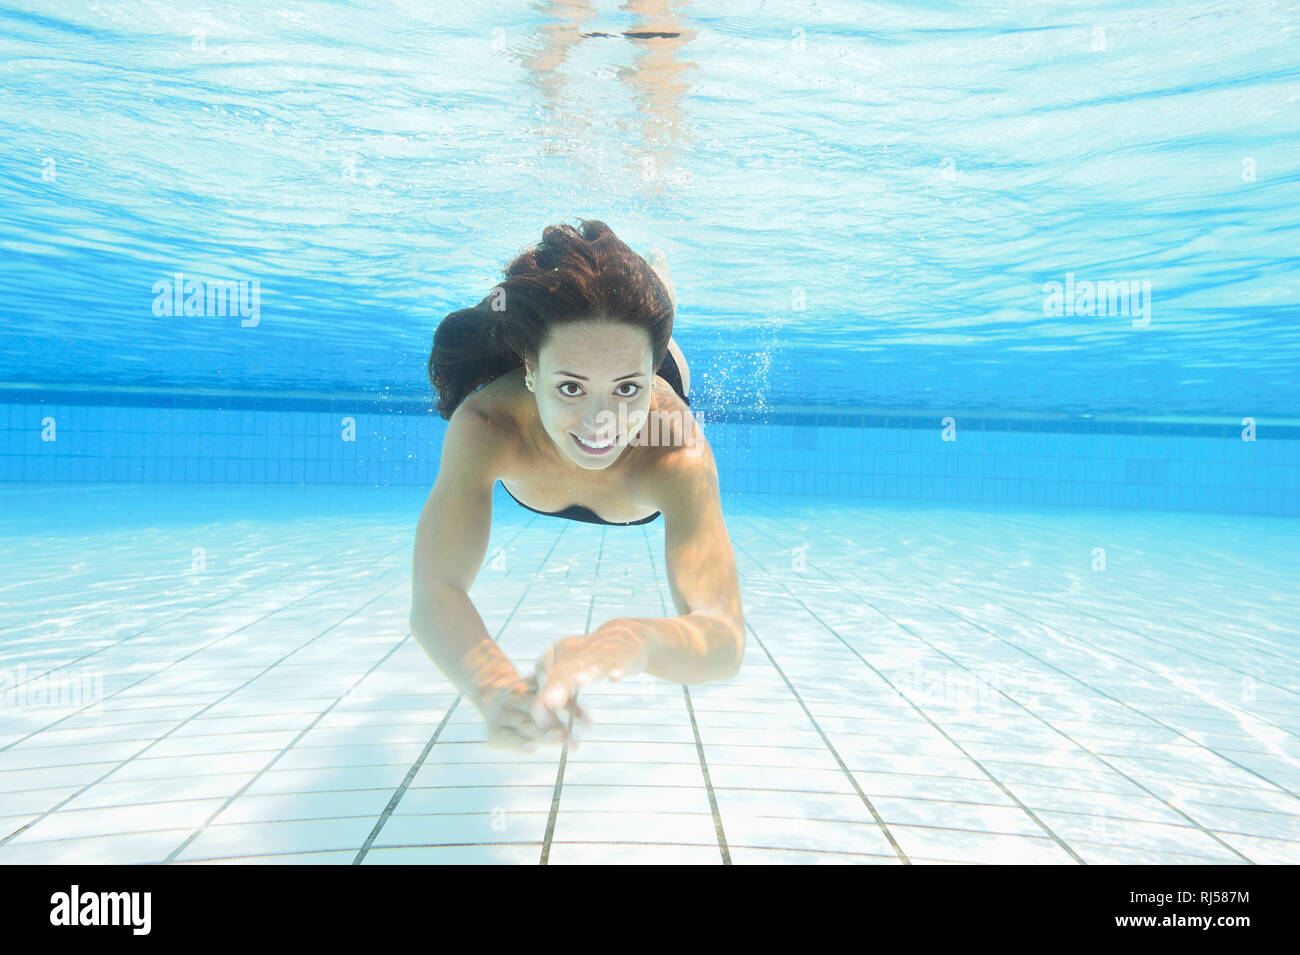 Frau e Jung, Bikini, Freibad, Unterwasser, frontale schwimmen, Blick Kamera Foto Stock